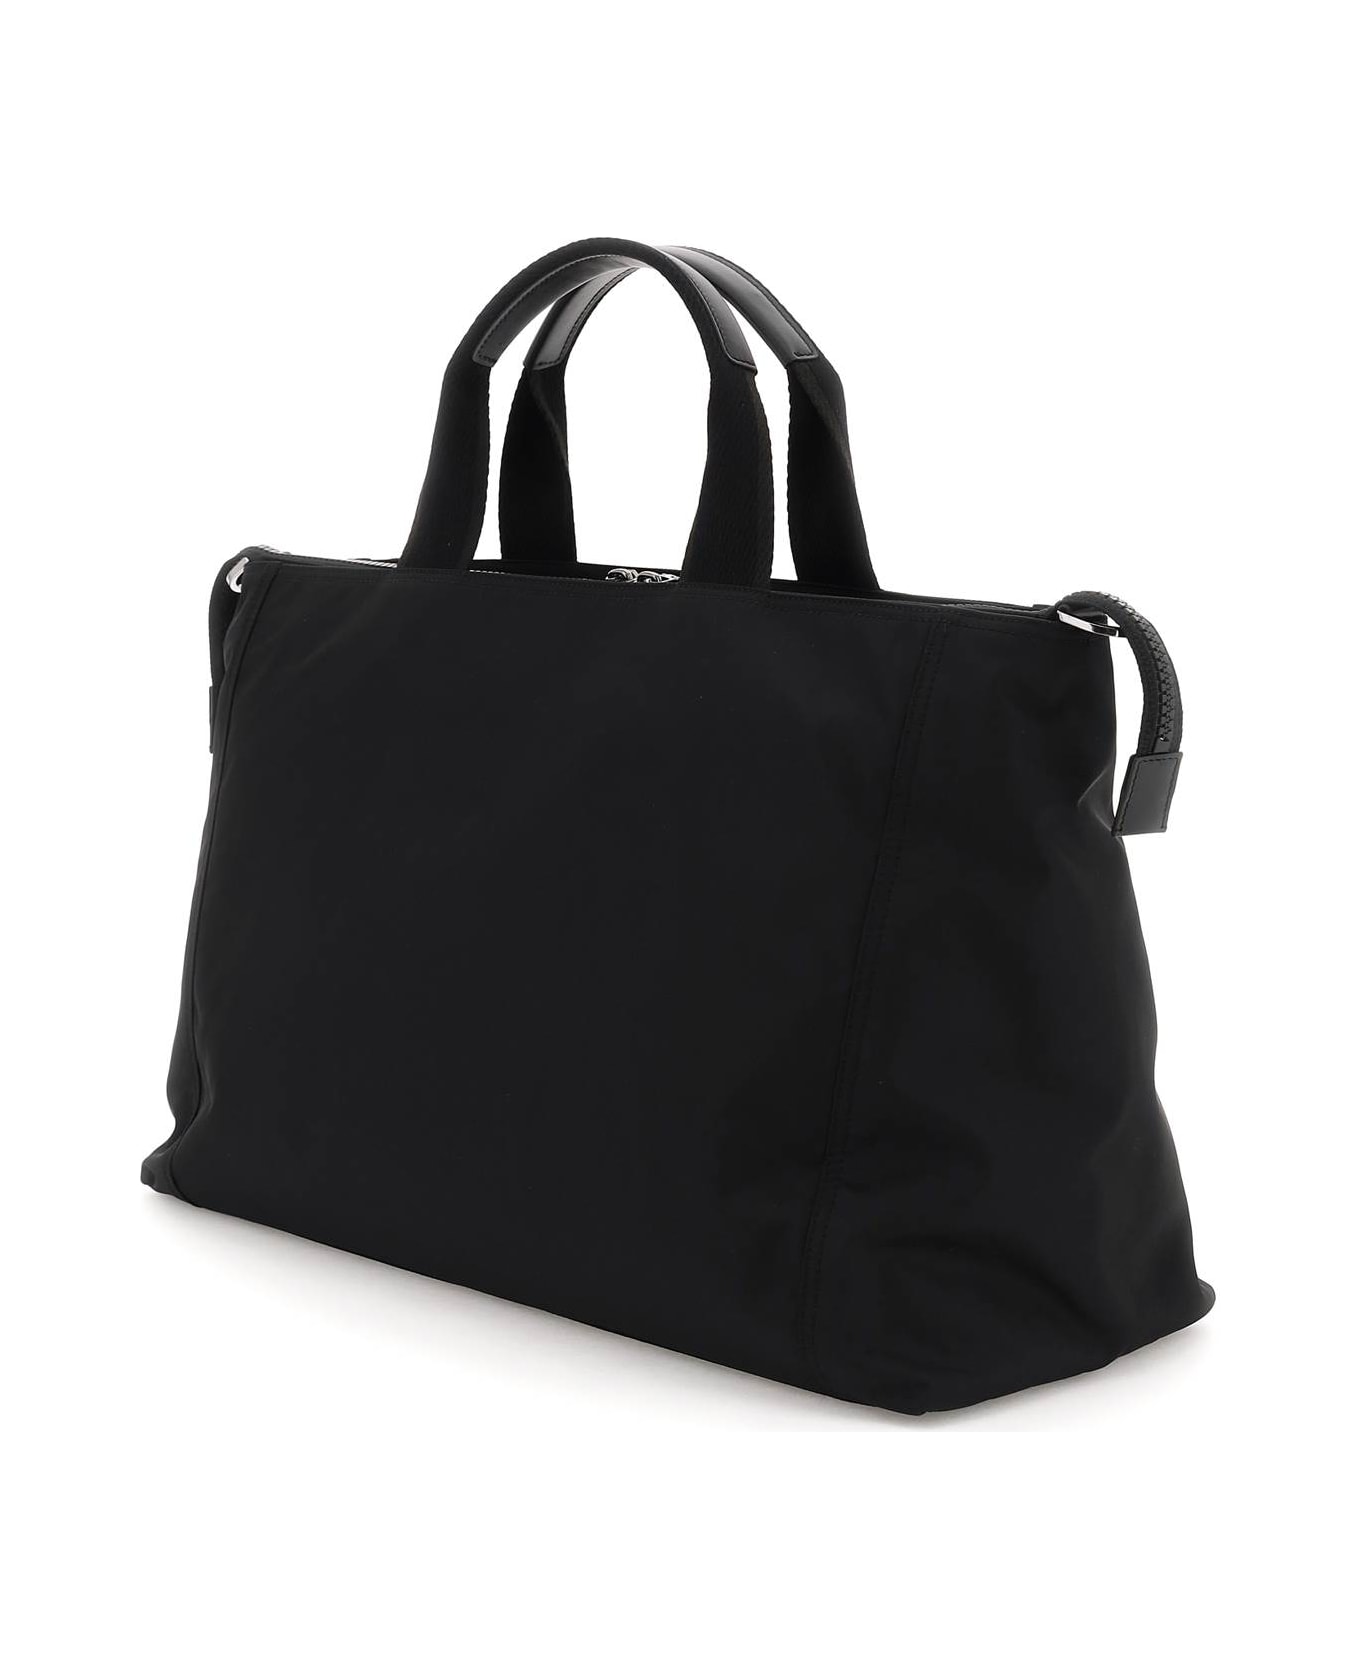 Dolce & Gabbana Nylon Duffle Bag With Logo - Nero/nero トートバッグ